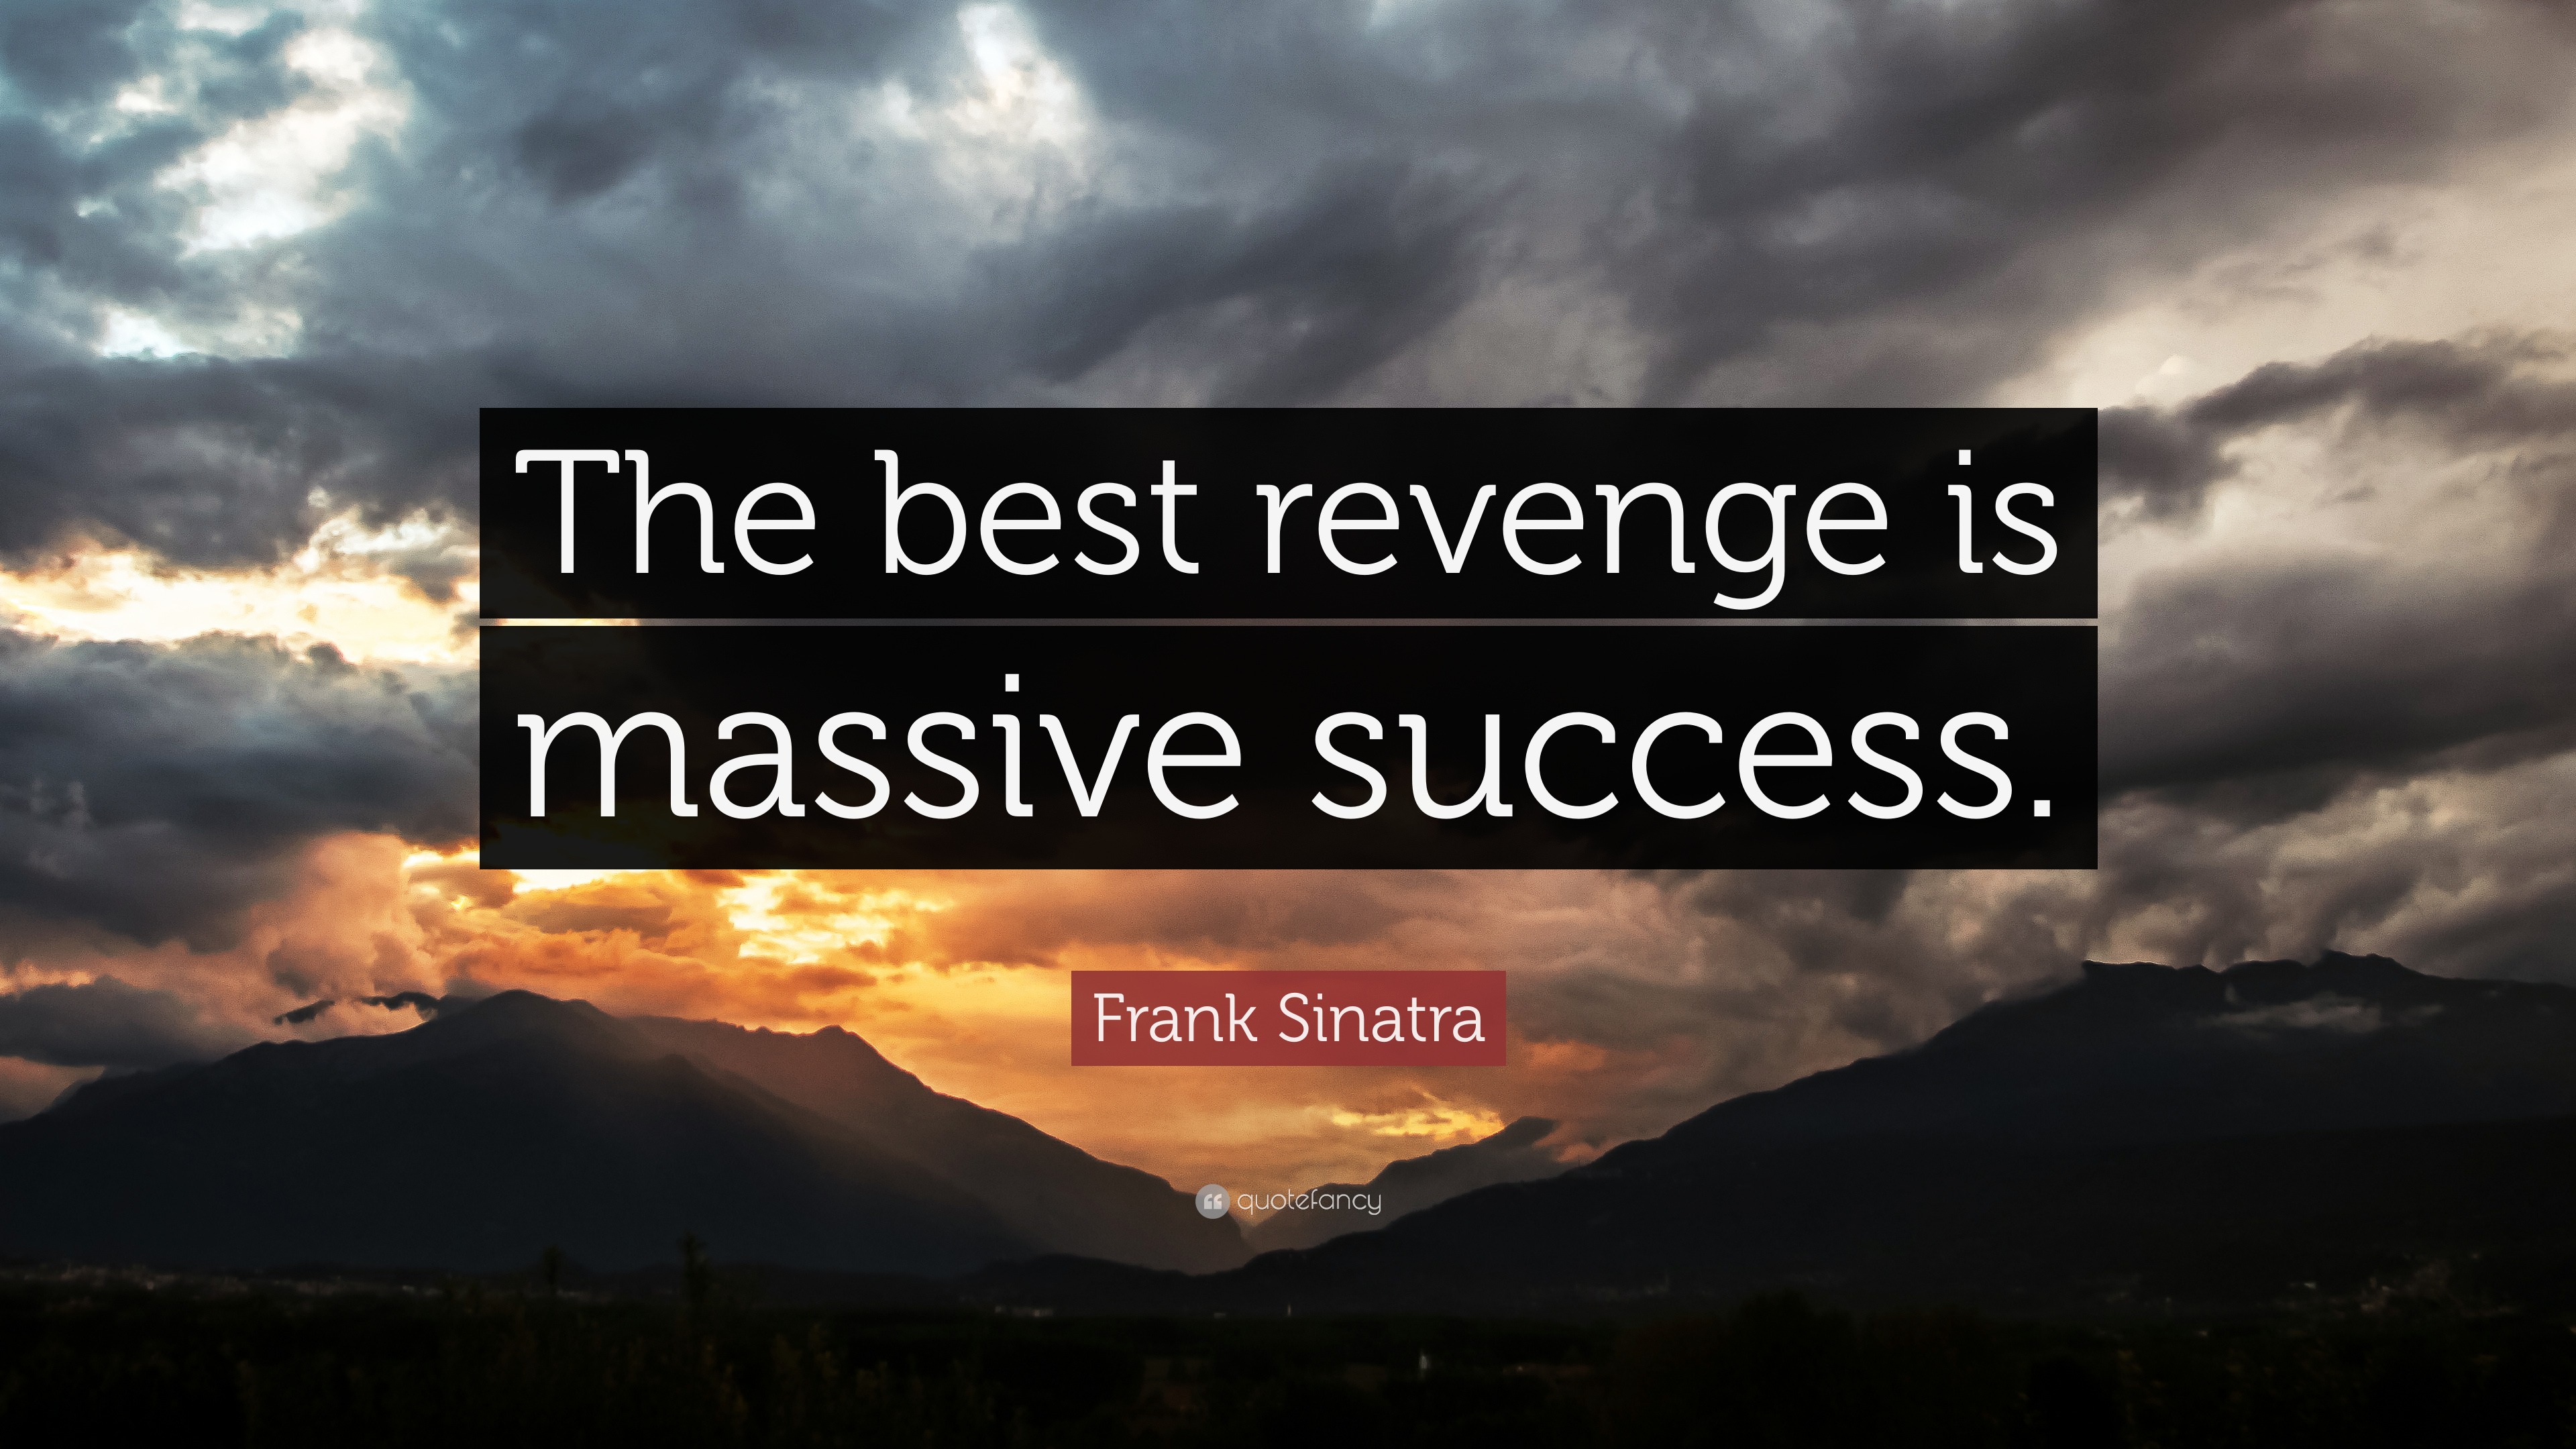 Frank Sinatra Quote “The best revenge is massive success.”